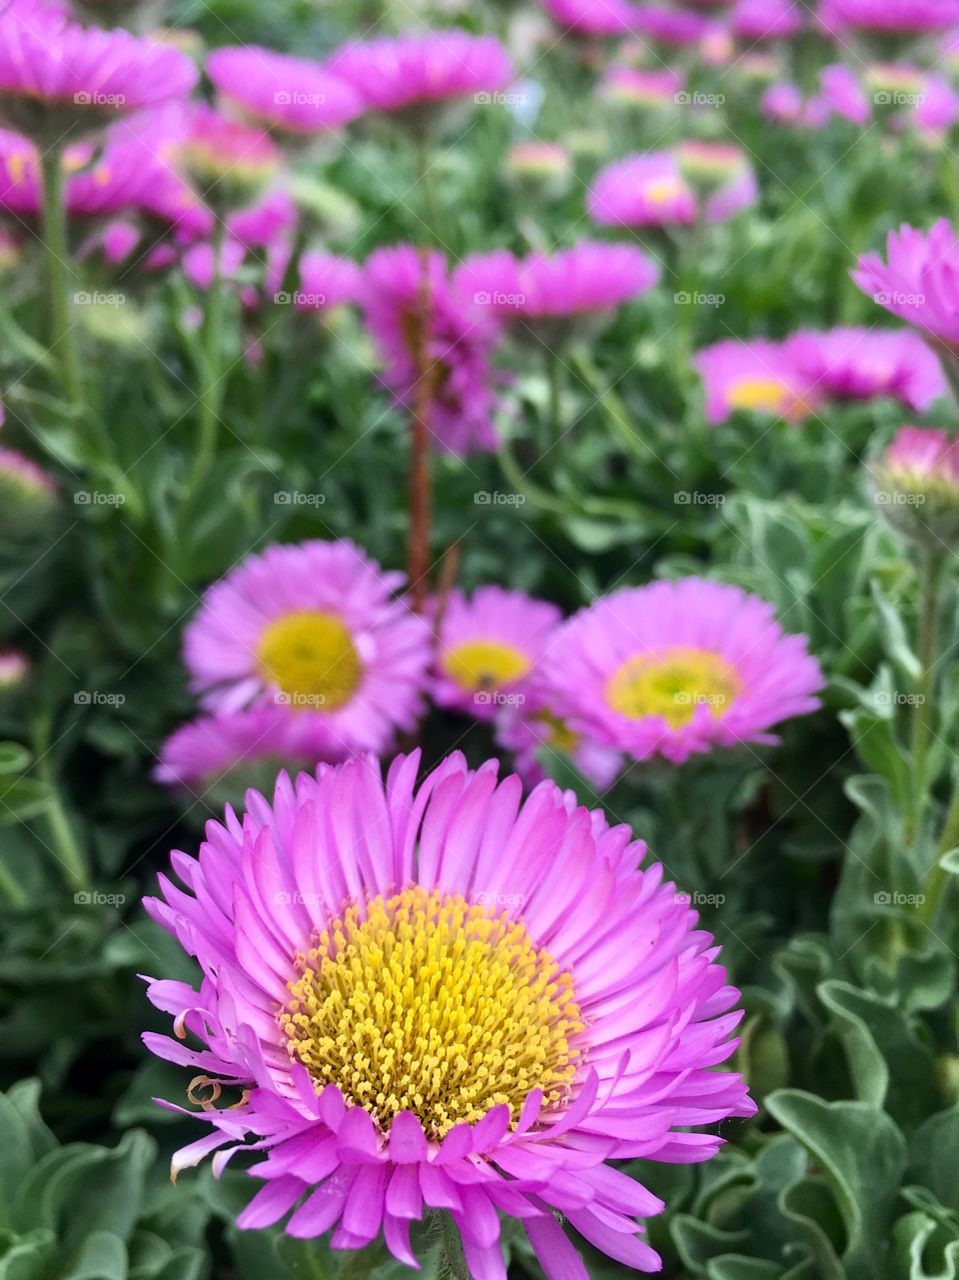 Flowers up close 